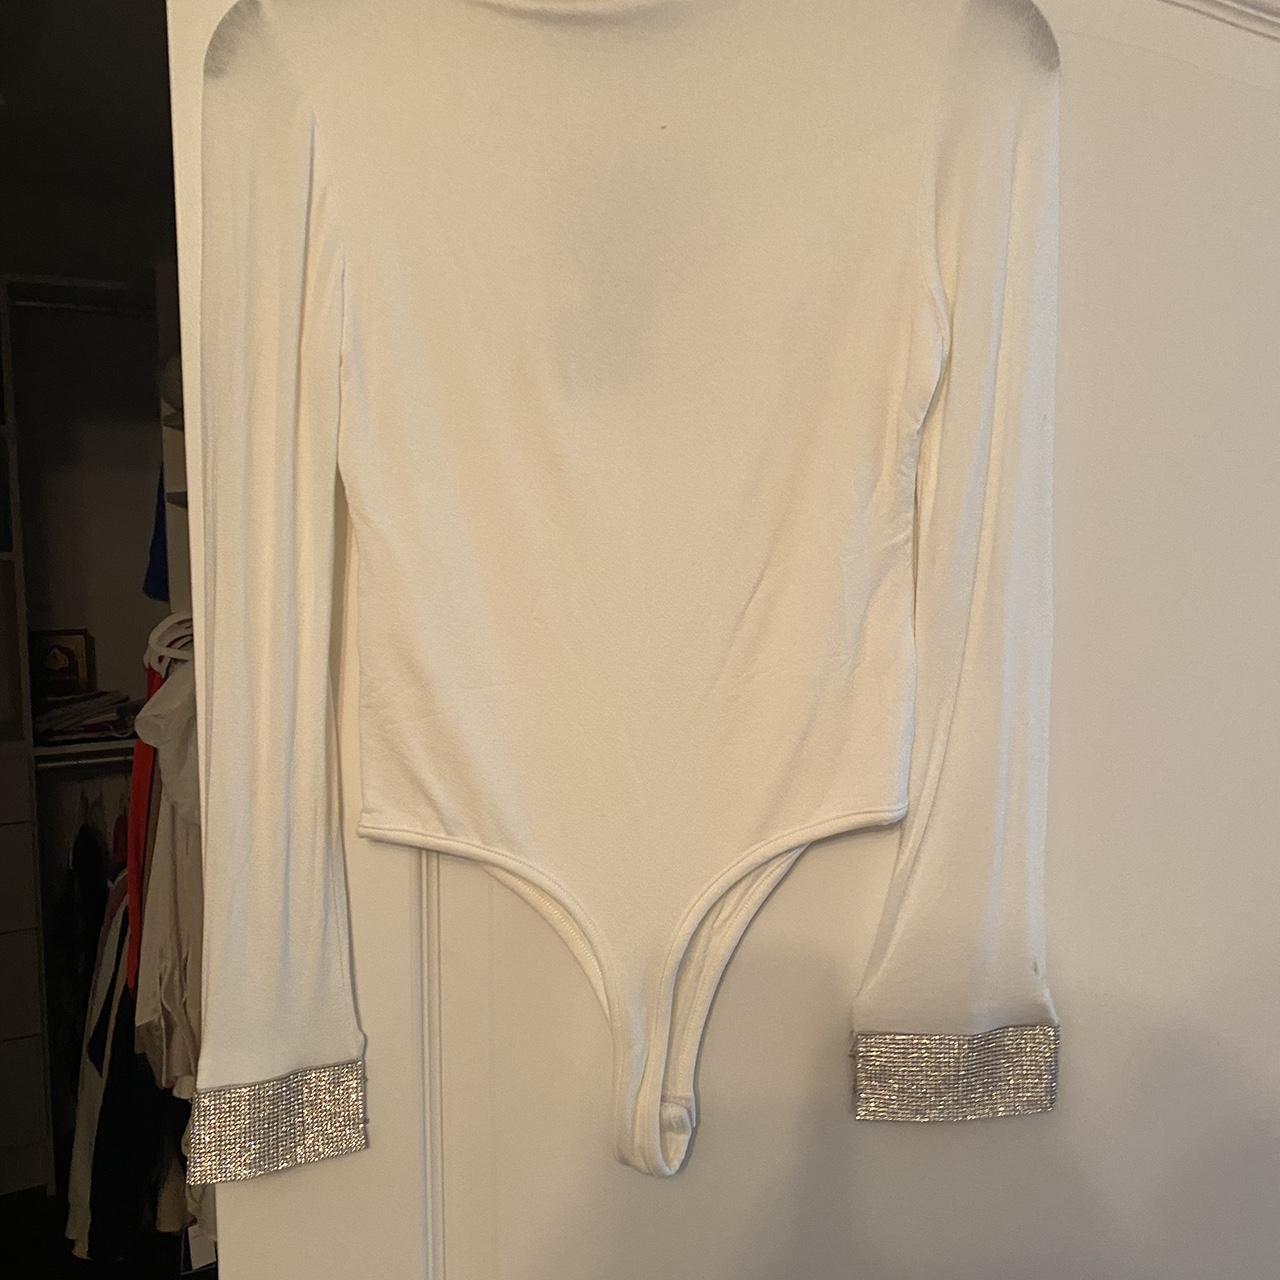 Naked Wardrobe White Full Zip Pockets Long Sleeve - Depop